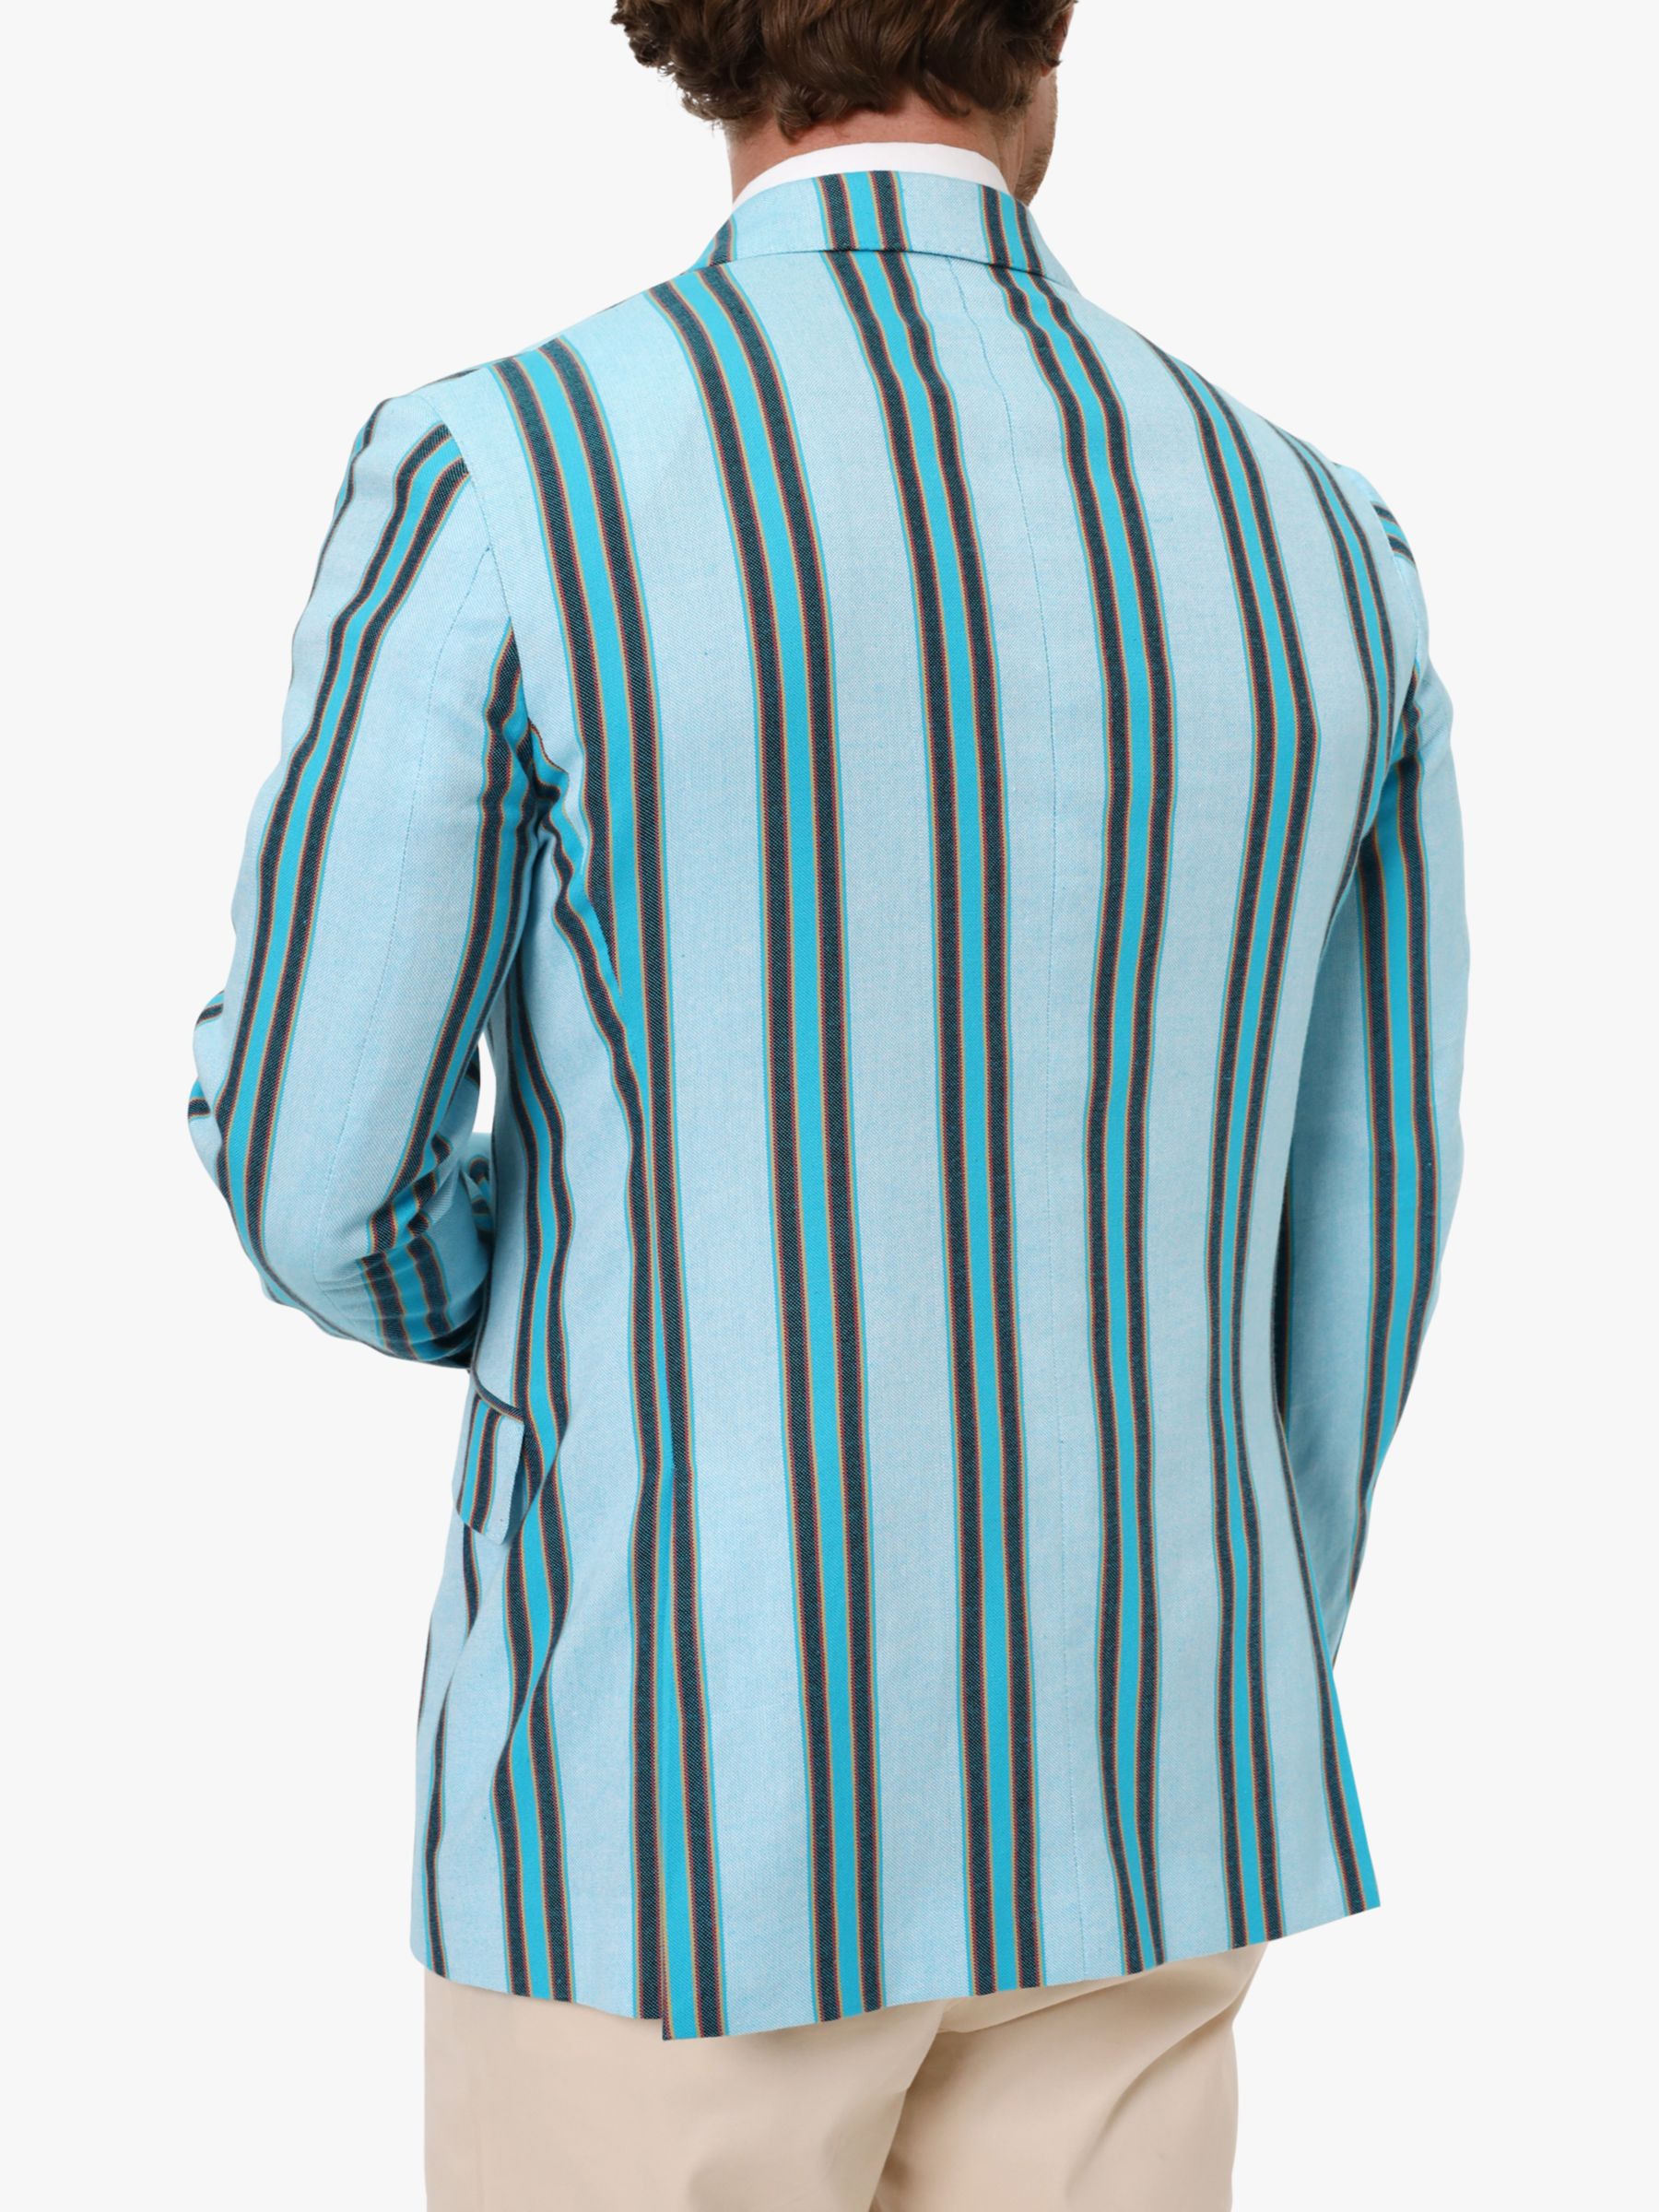 KOY Kikoy Striped Blazer, Turquoise, 38R